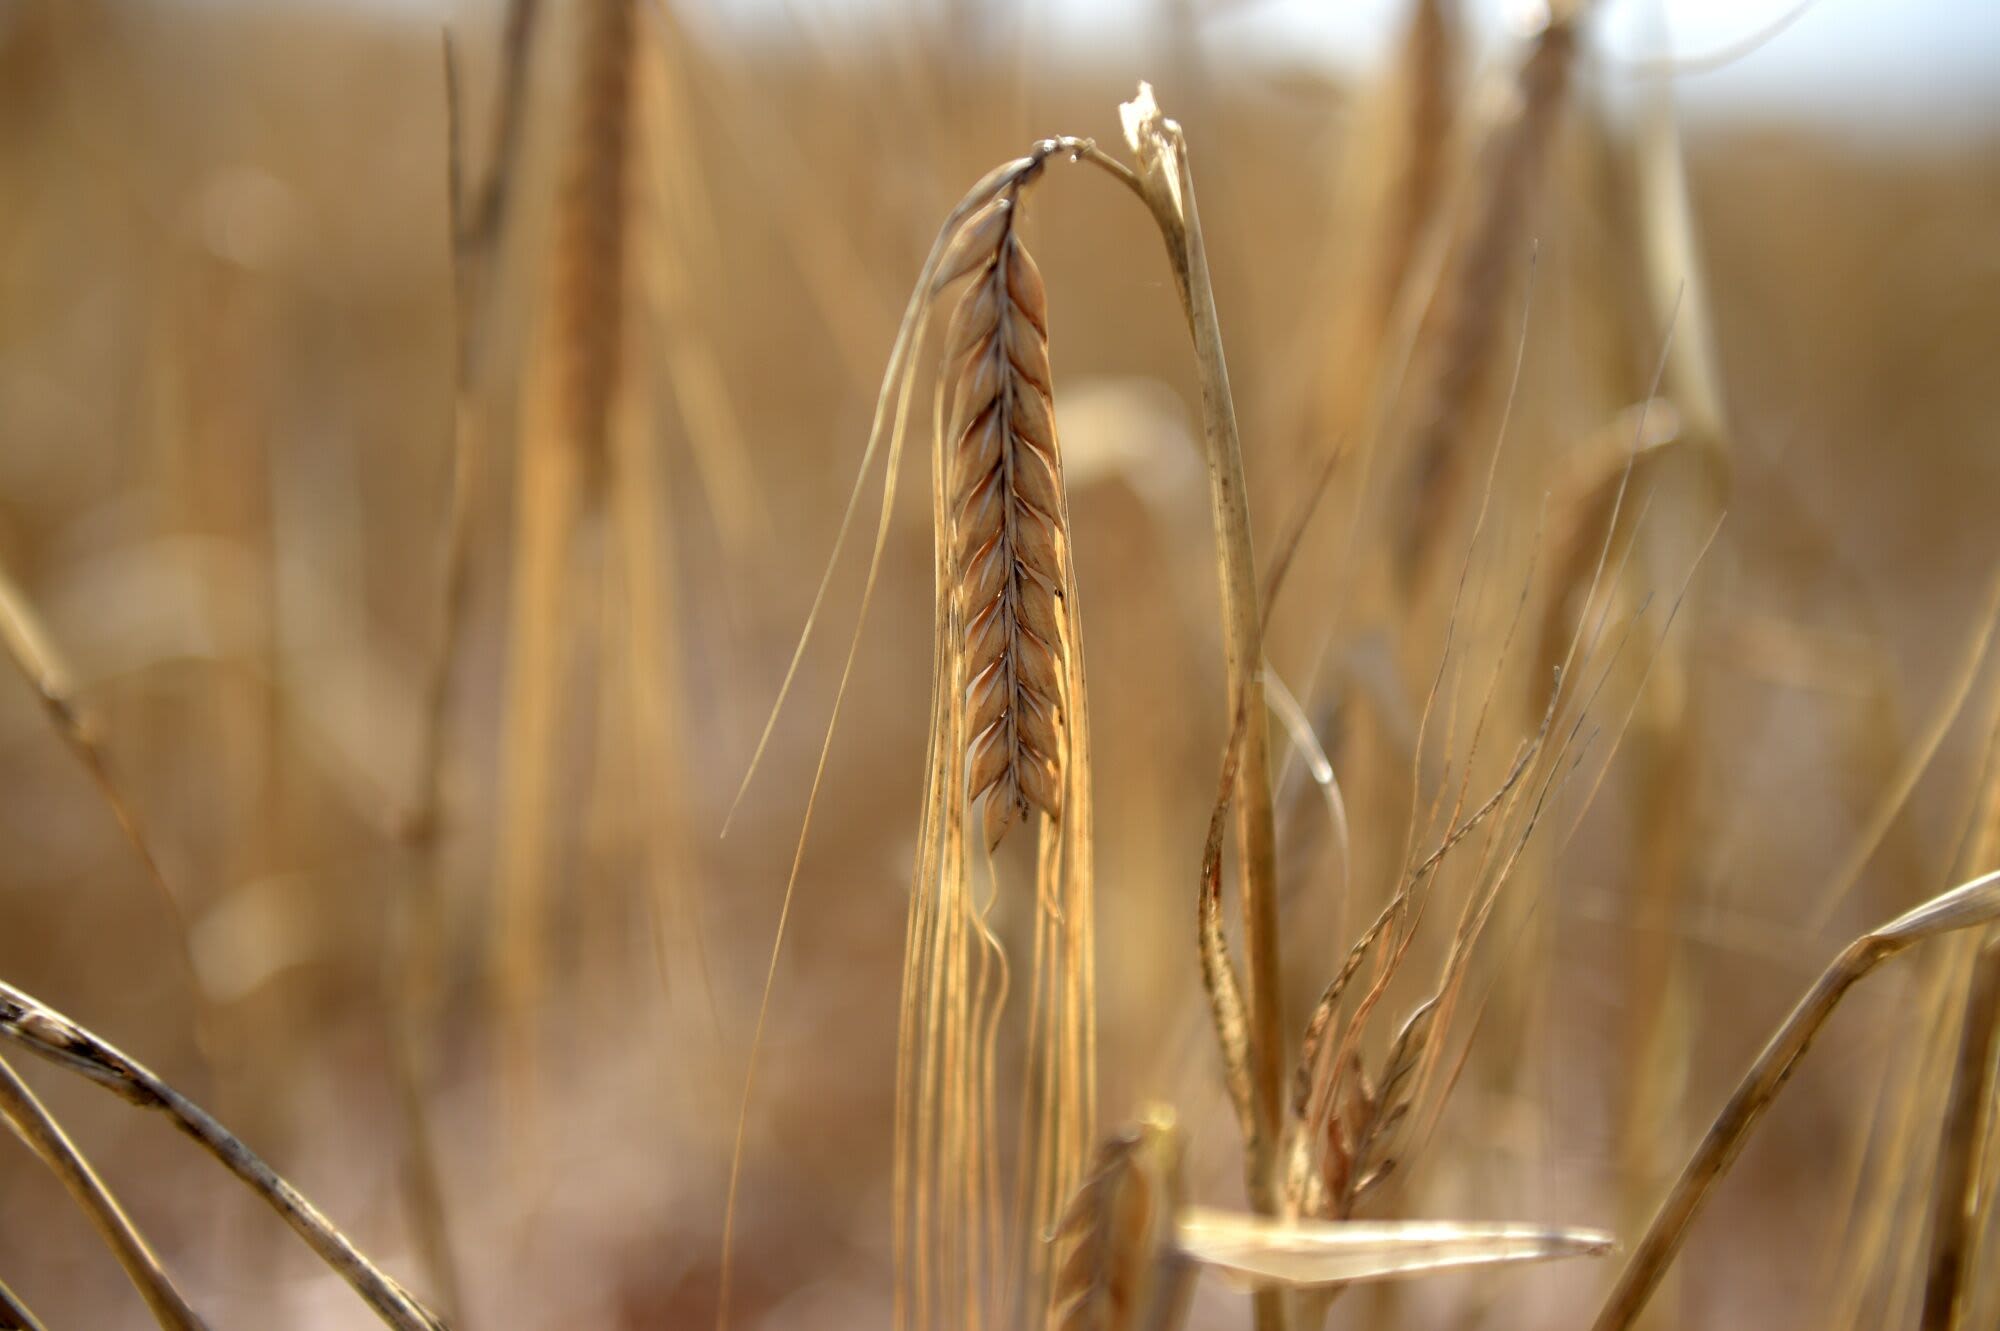 Dry Weather in Australia’s Top Grain State Raises Crop Concerns